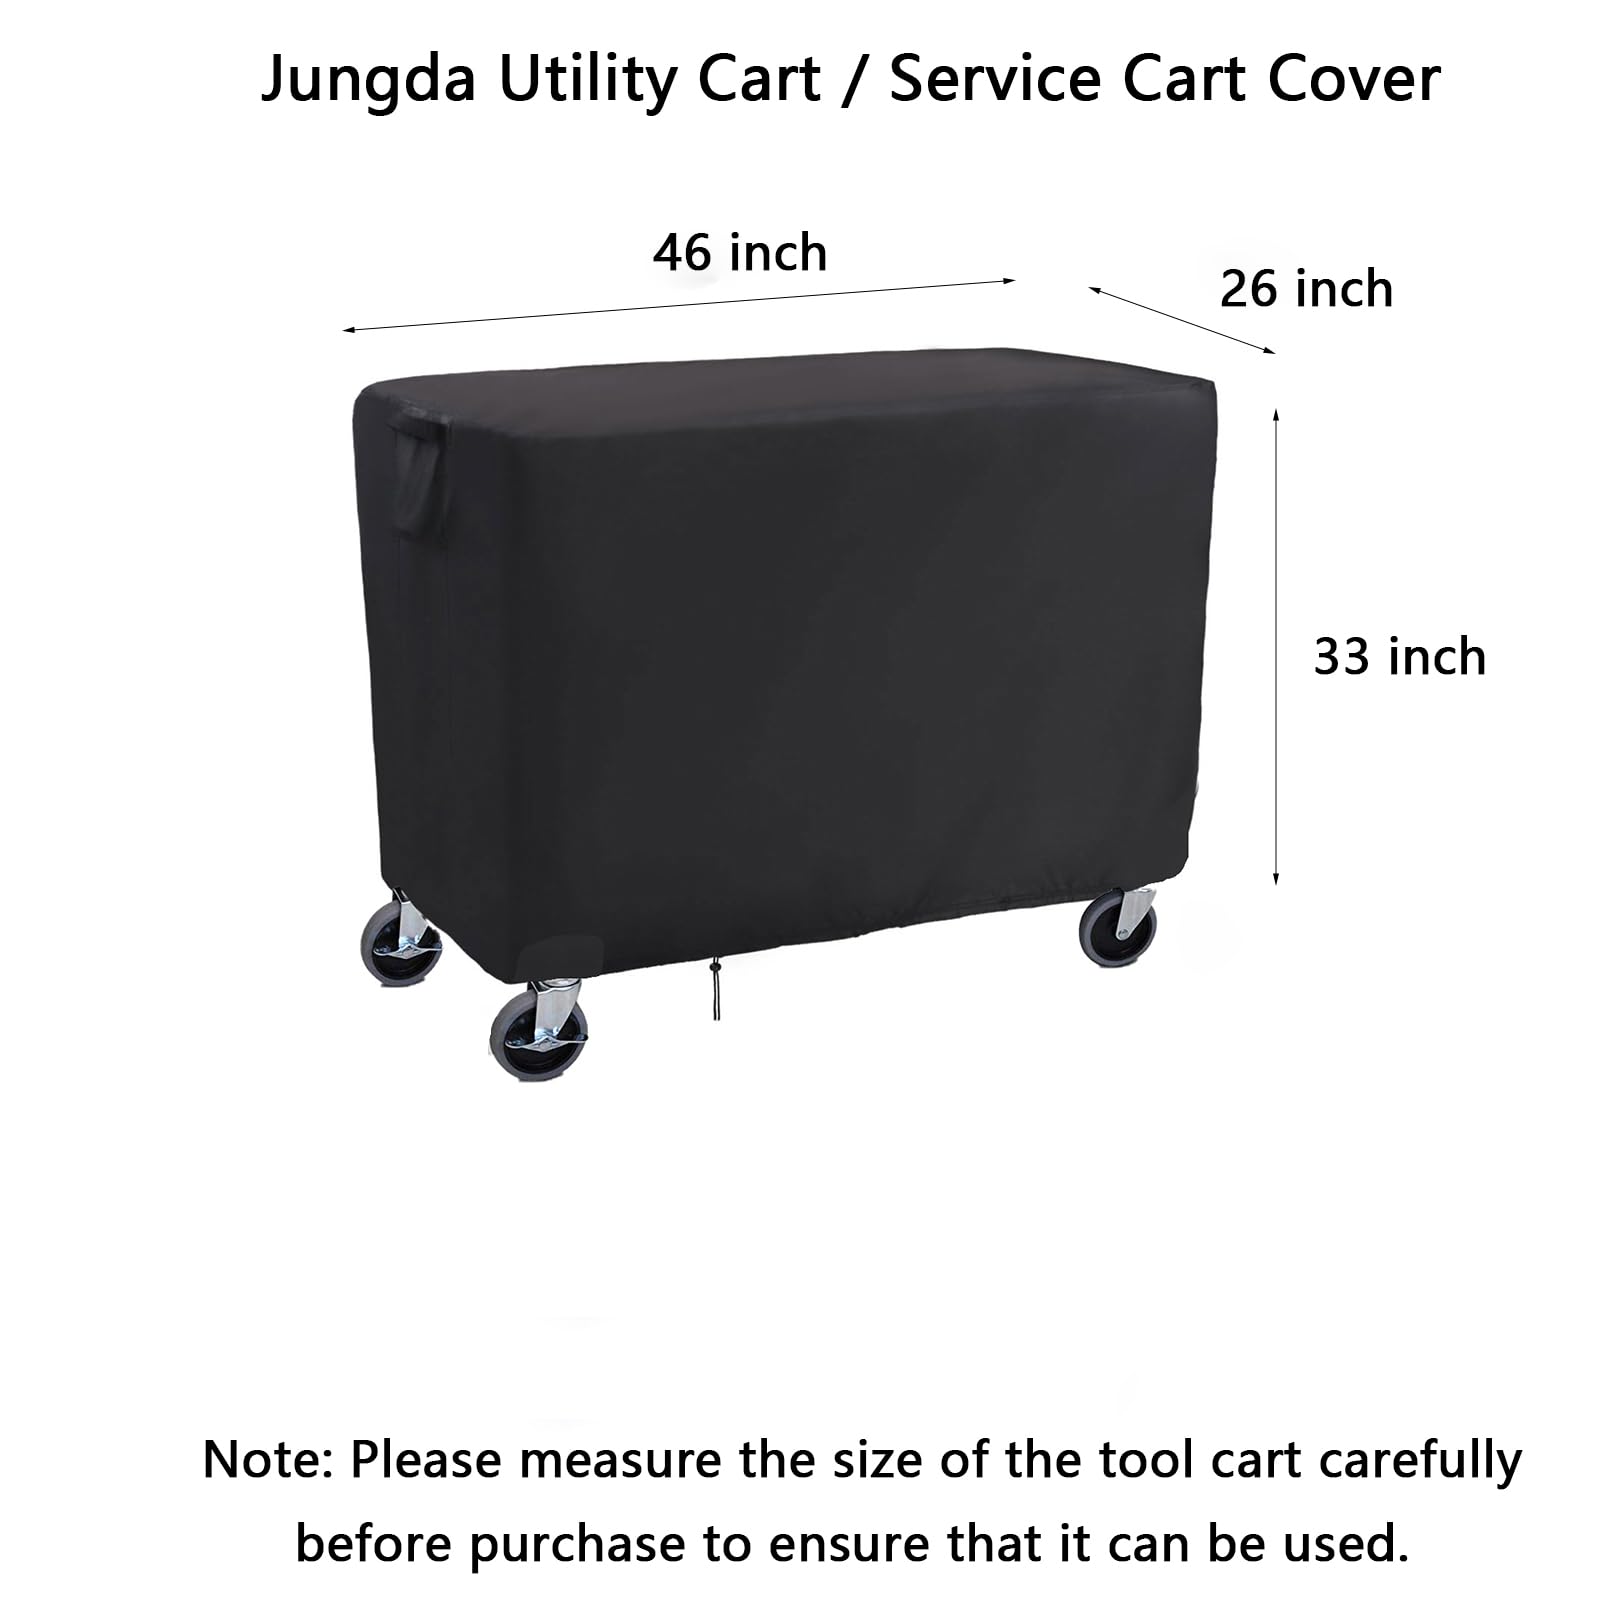 Jungda Rolling Tool Cart Cover 46 Inch,Waterproof Utility Cart Cover Service Cart Cover - 46 X 26 X 33 Inch